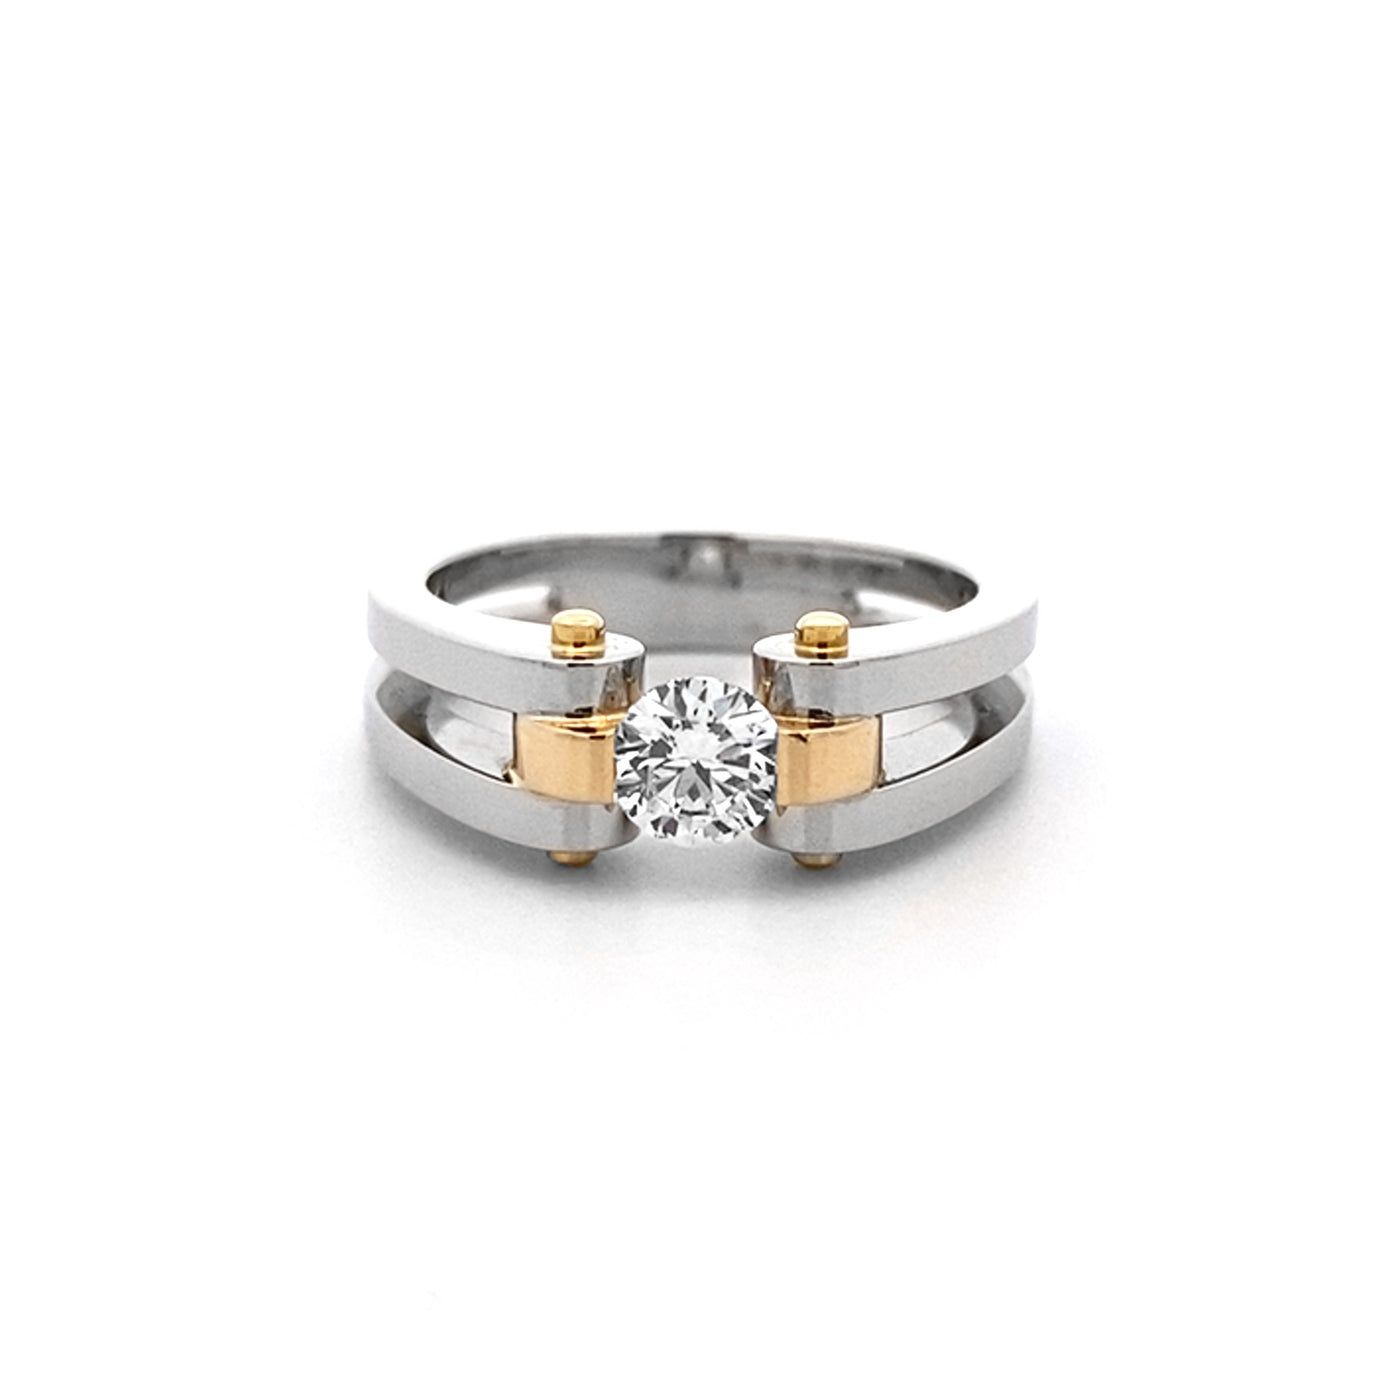 Circlipd Delicate: Brilliant Cut Diamond Solitaire Ring in Platinum | 0.42ct